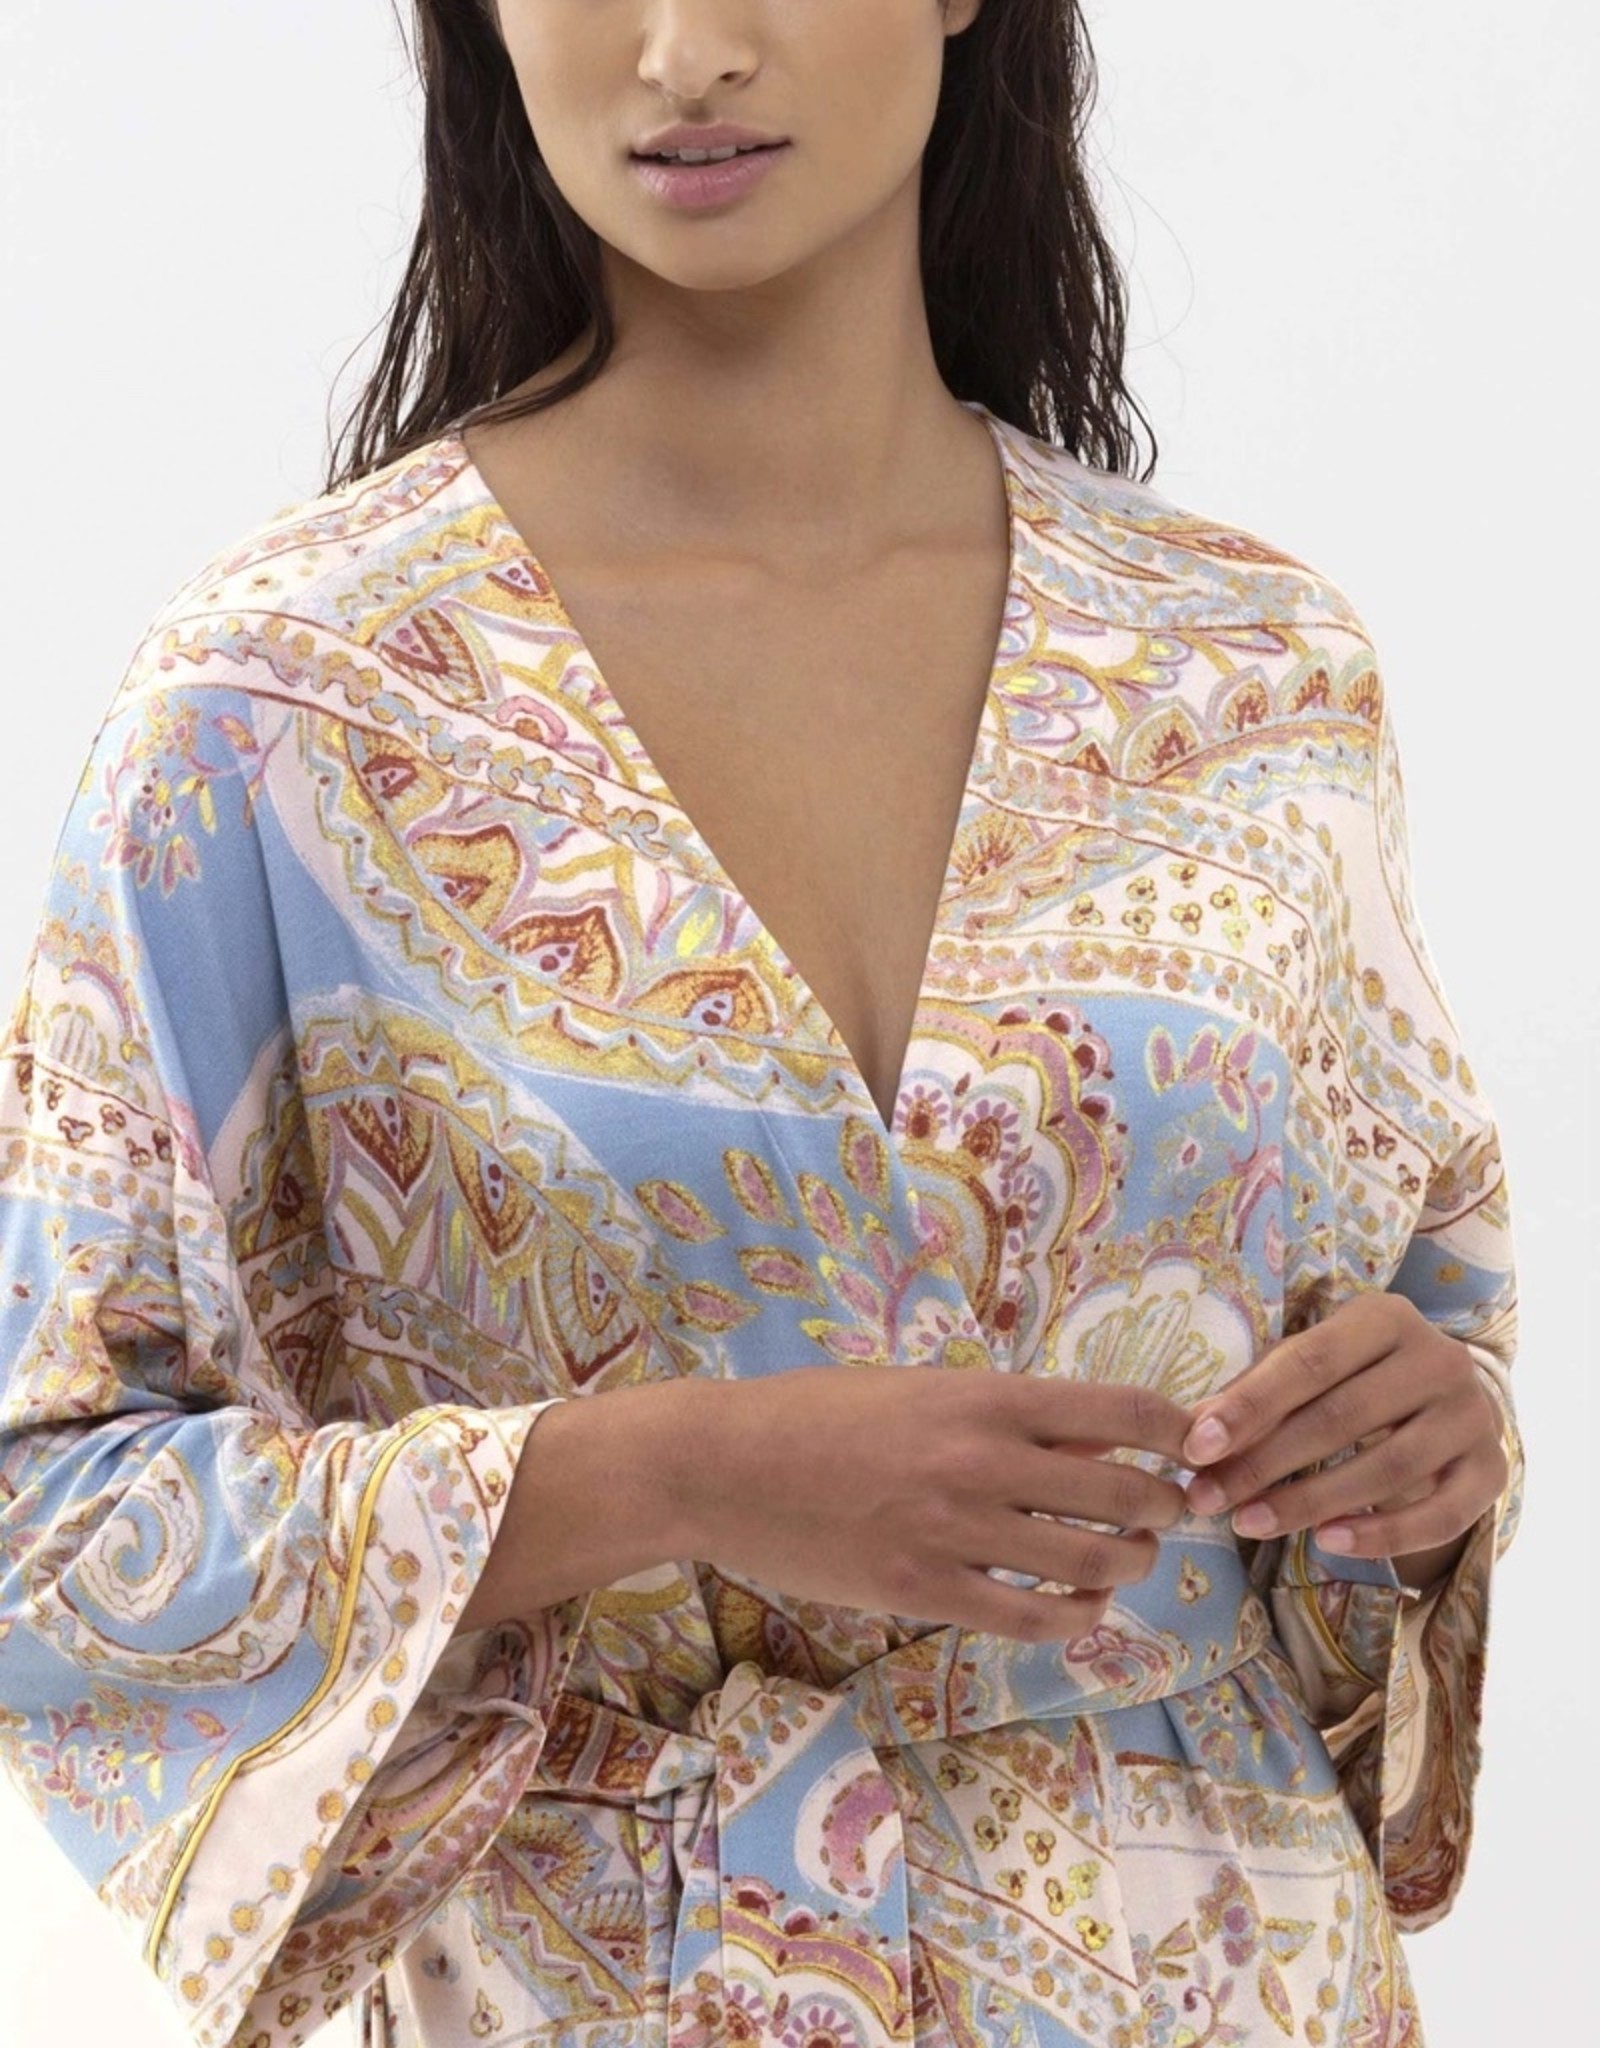 Mey Bente Kimono